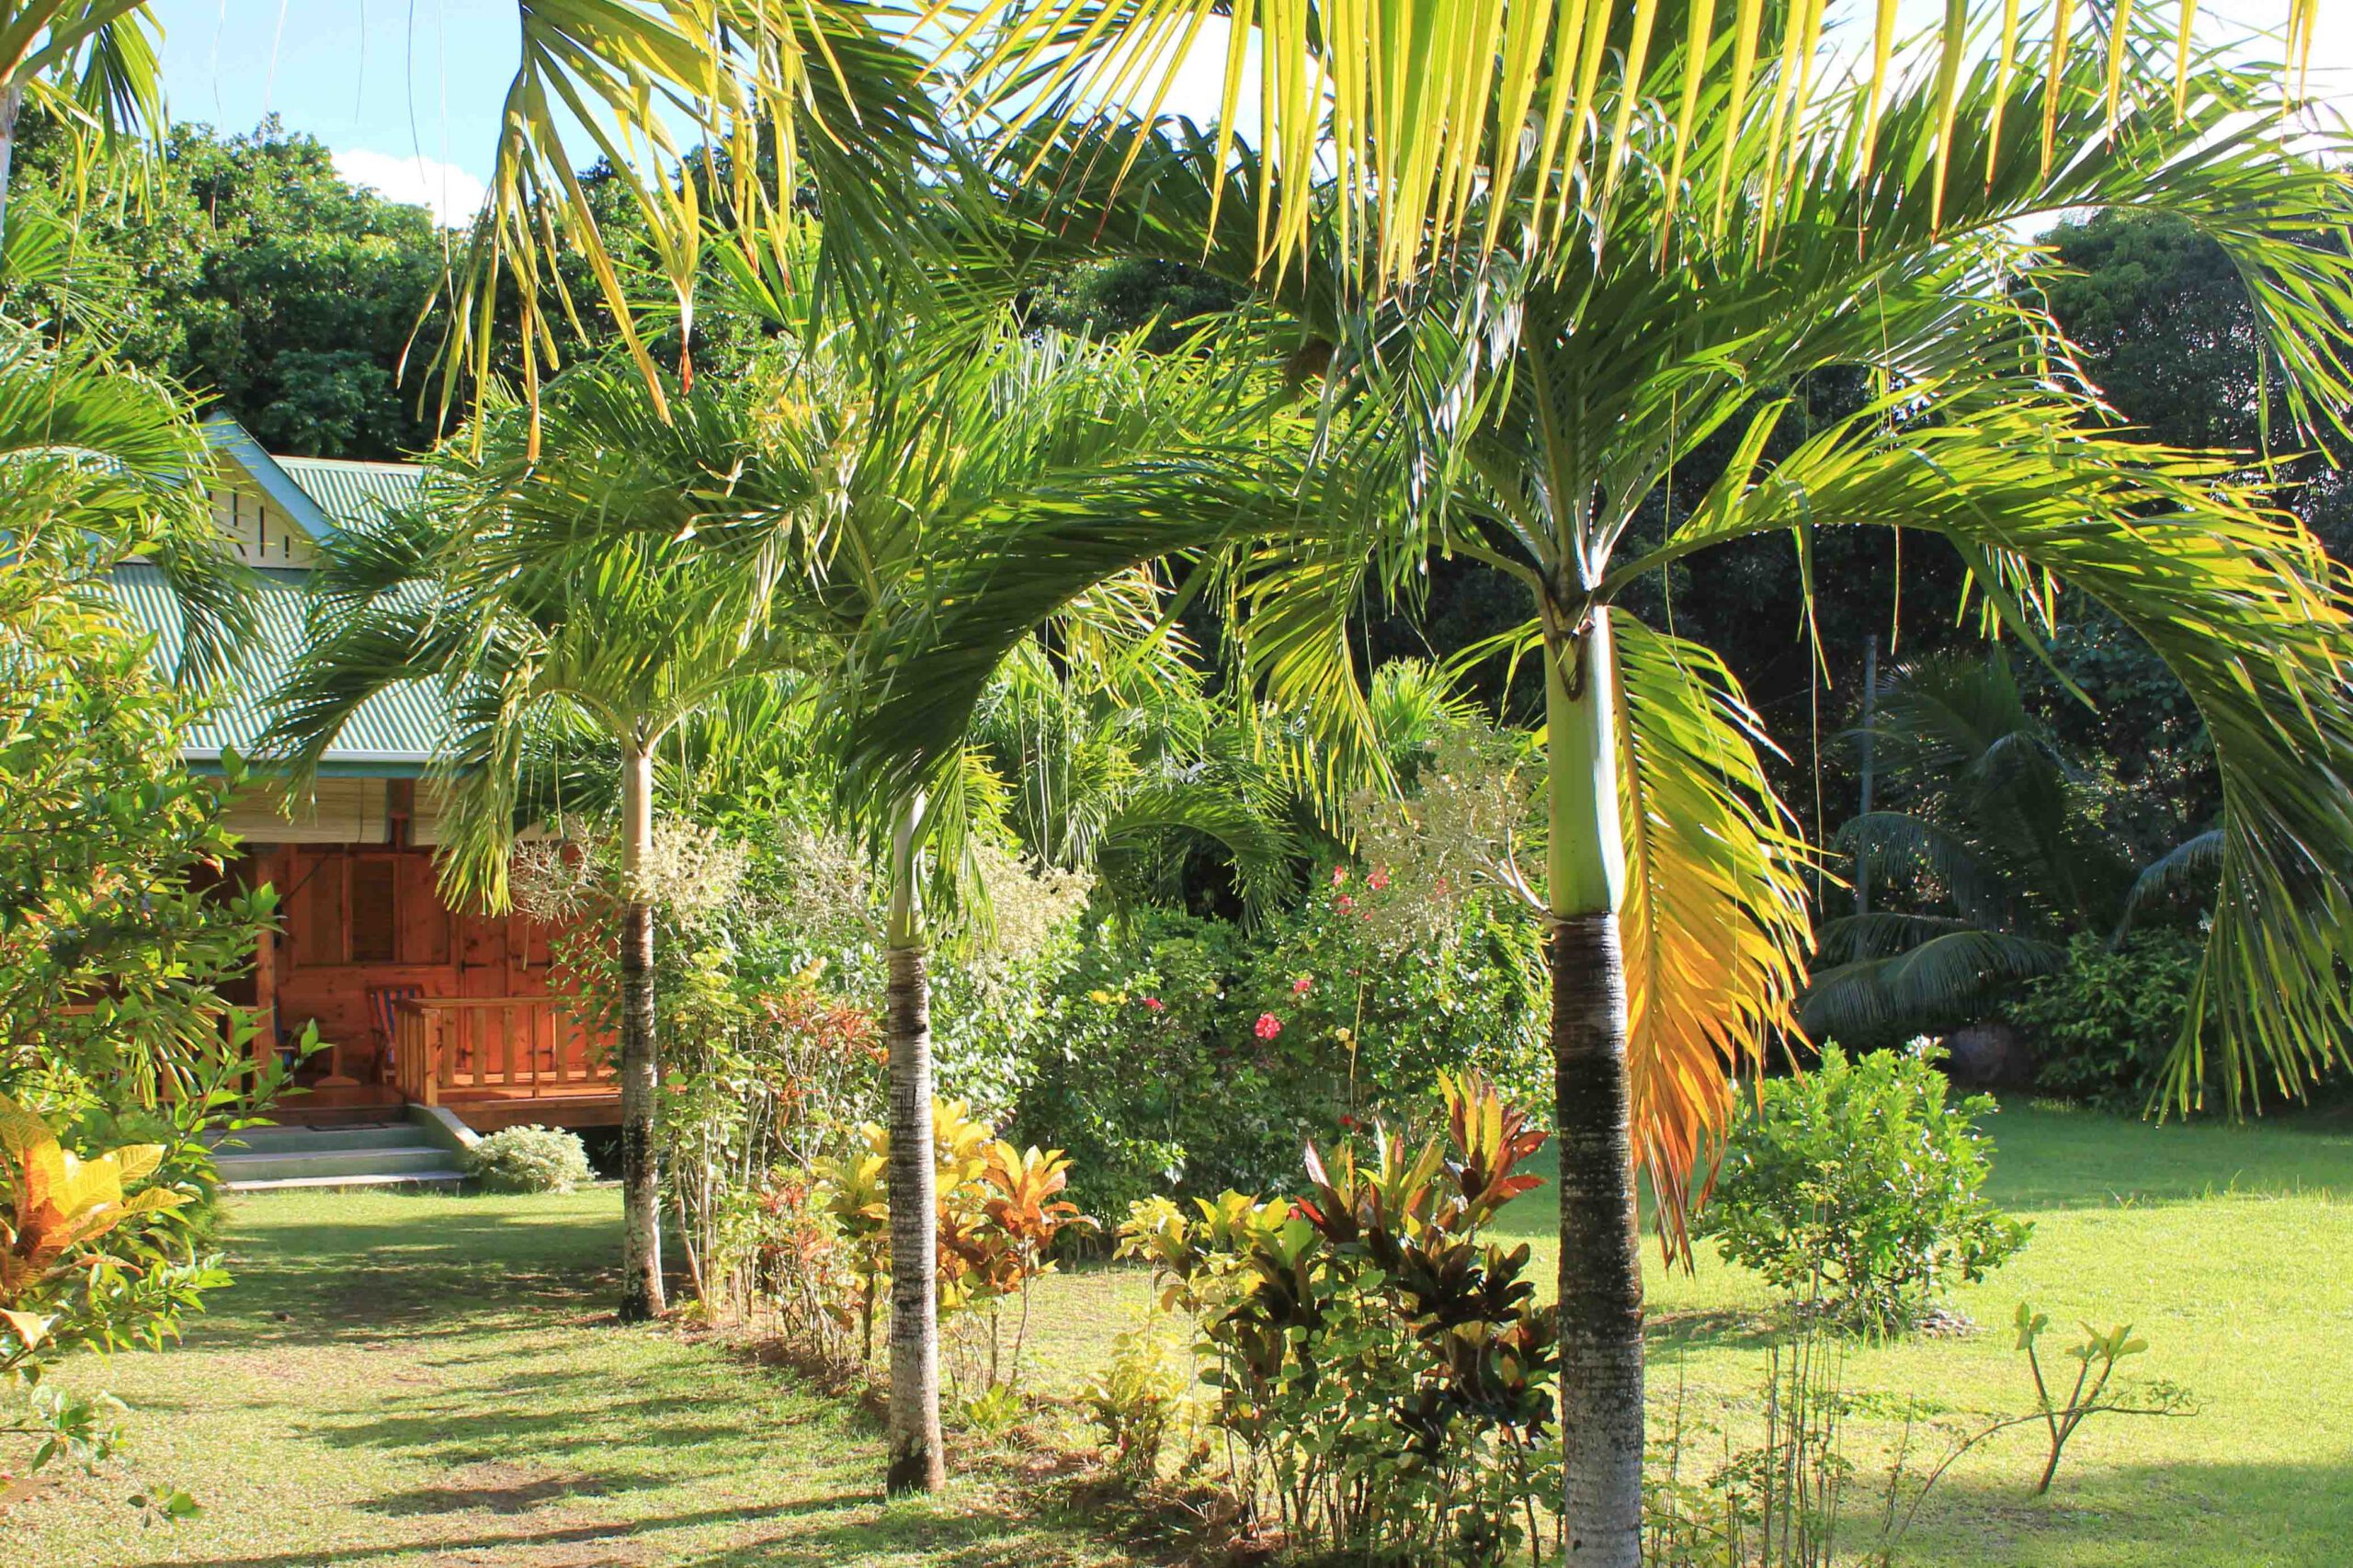 Chalet Kokoleo behind palm trees